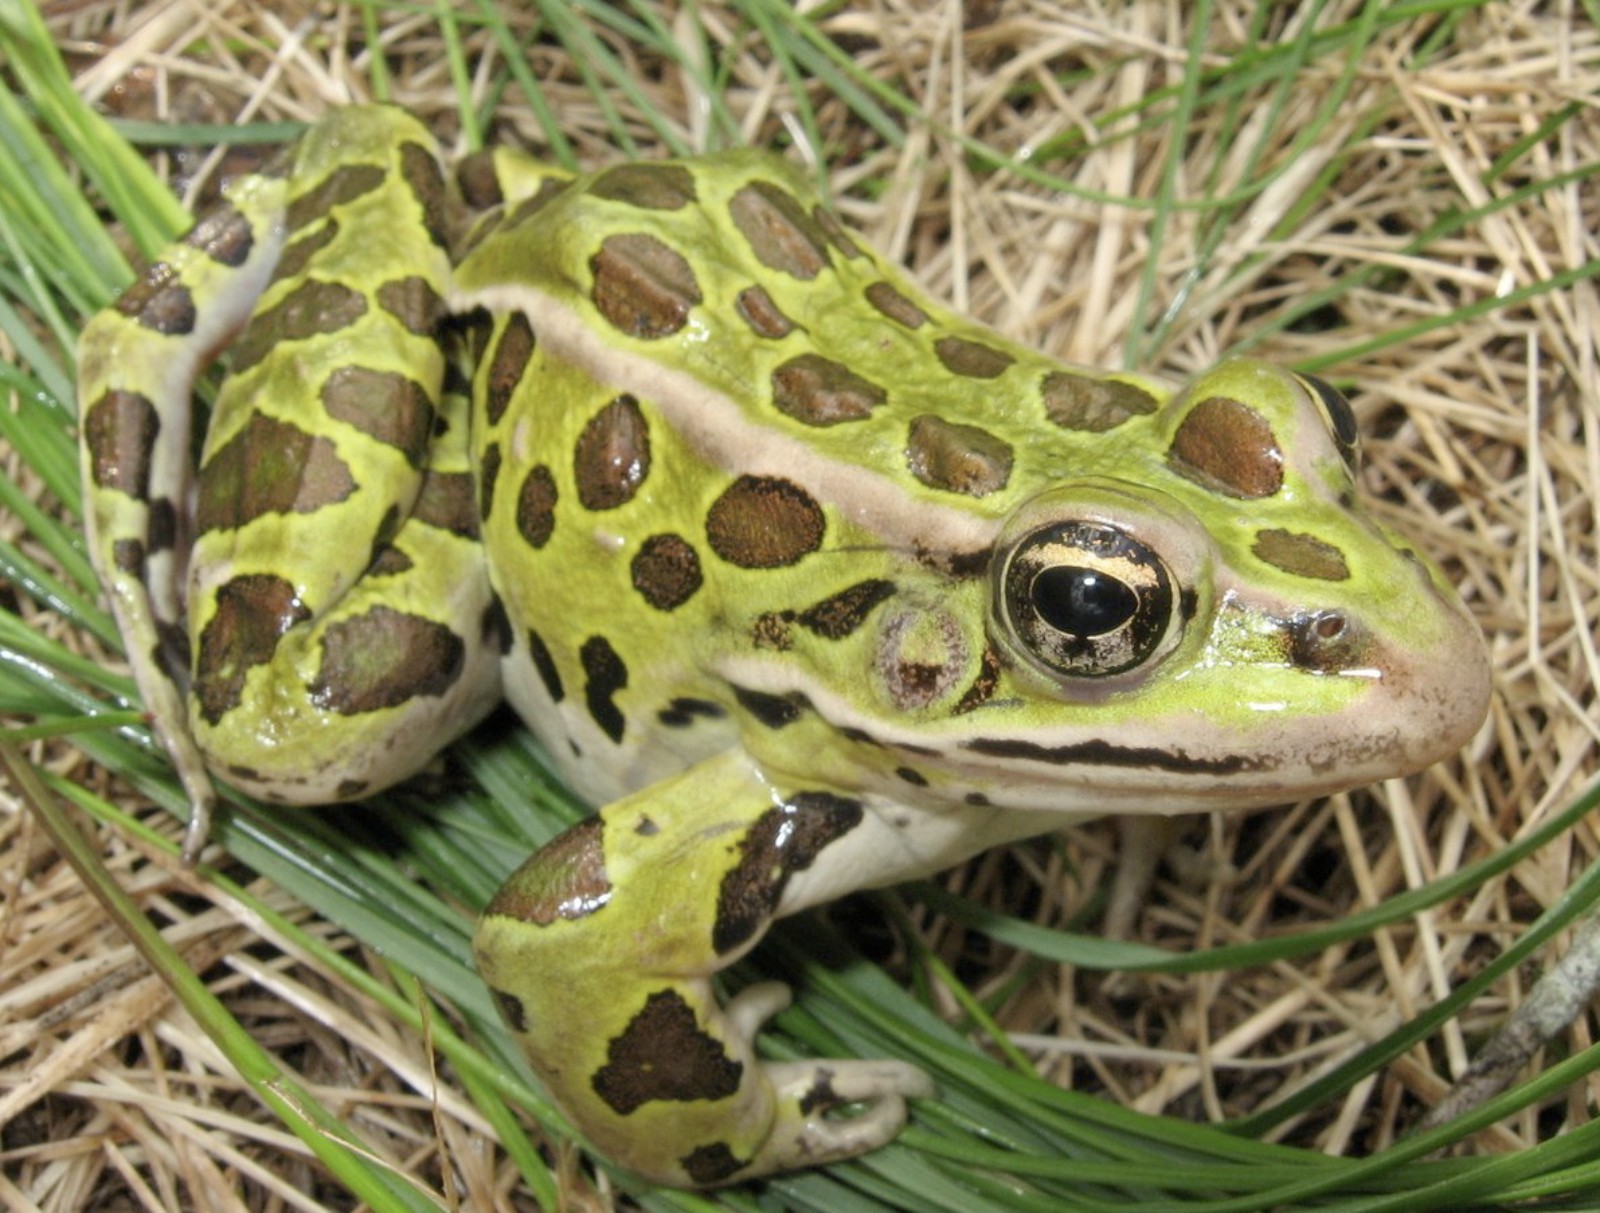 Lithobates pipiens – Northern Leopard Frog